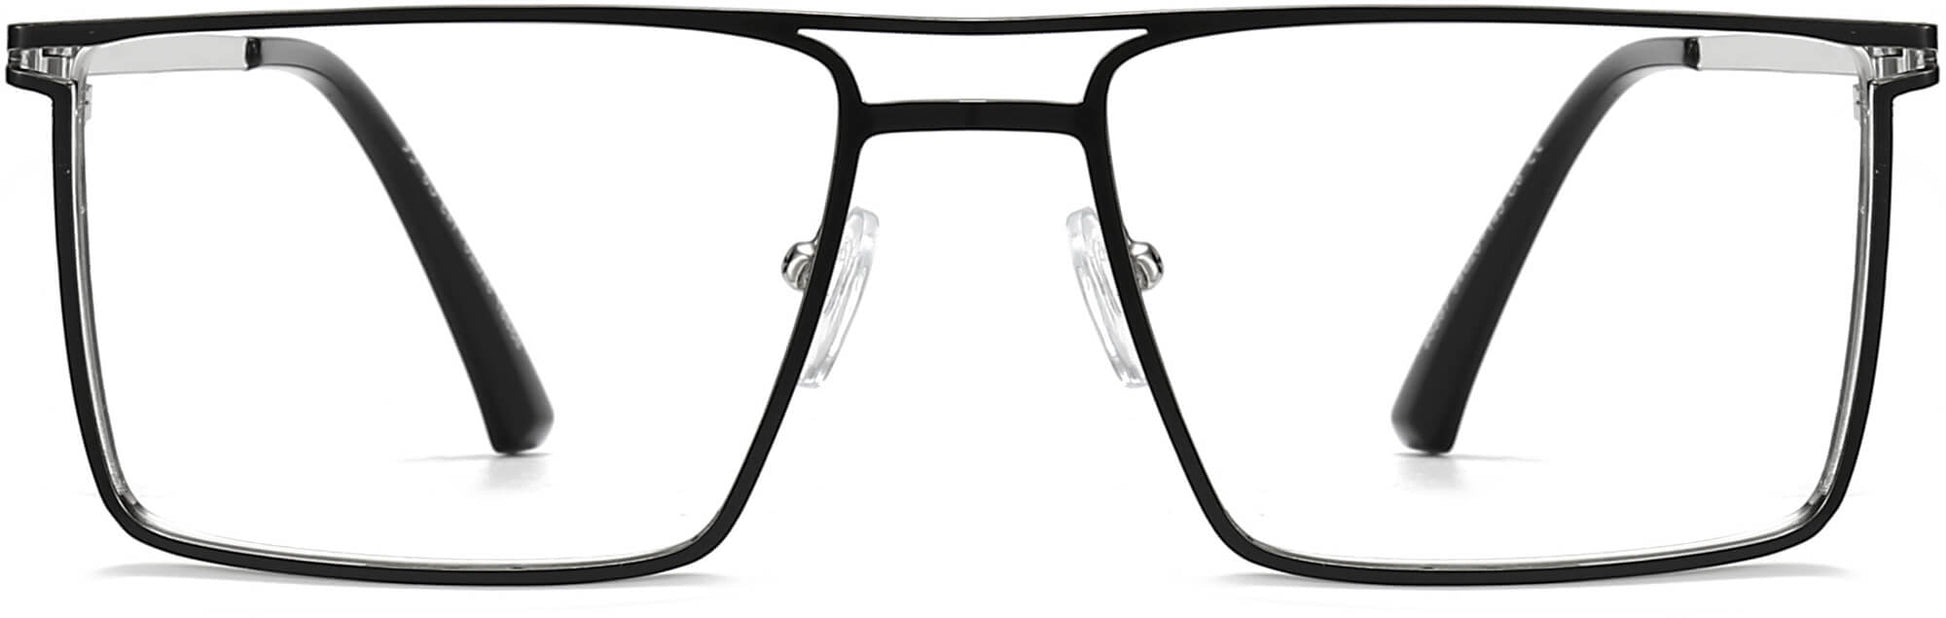 Nixon Square Black Eyeglasses from ANRRI, front view